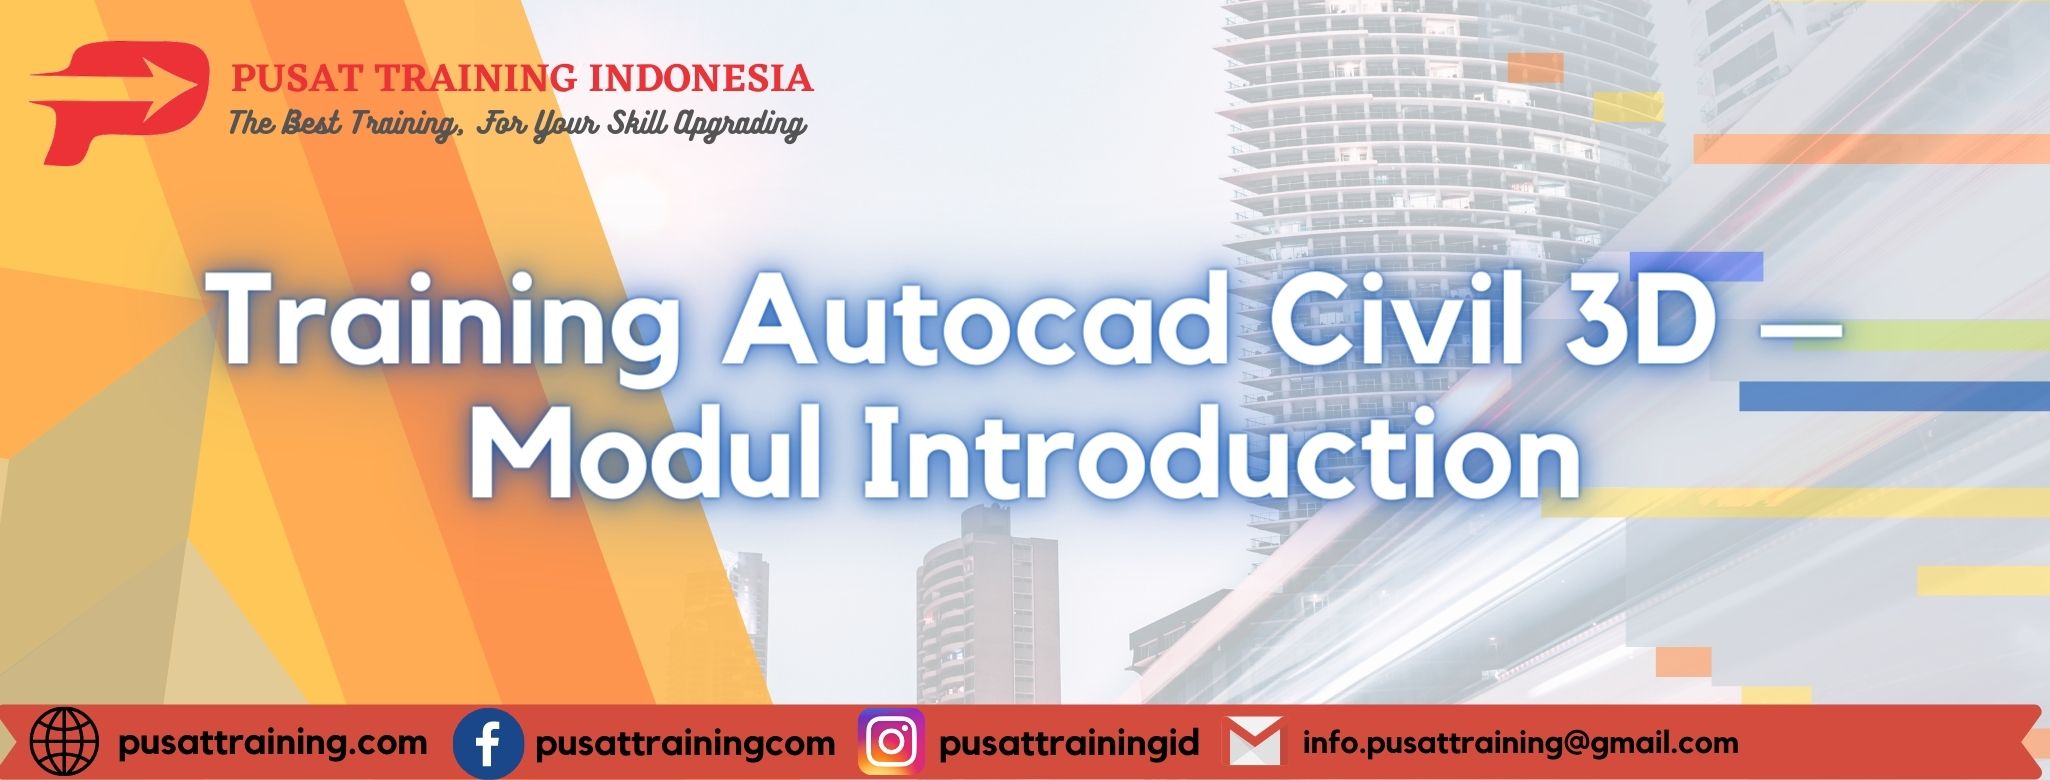 Training-Autocad-Civil-3D-Modul-Introduction